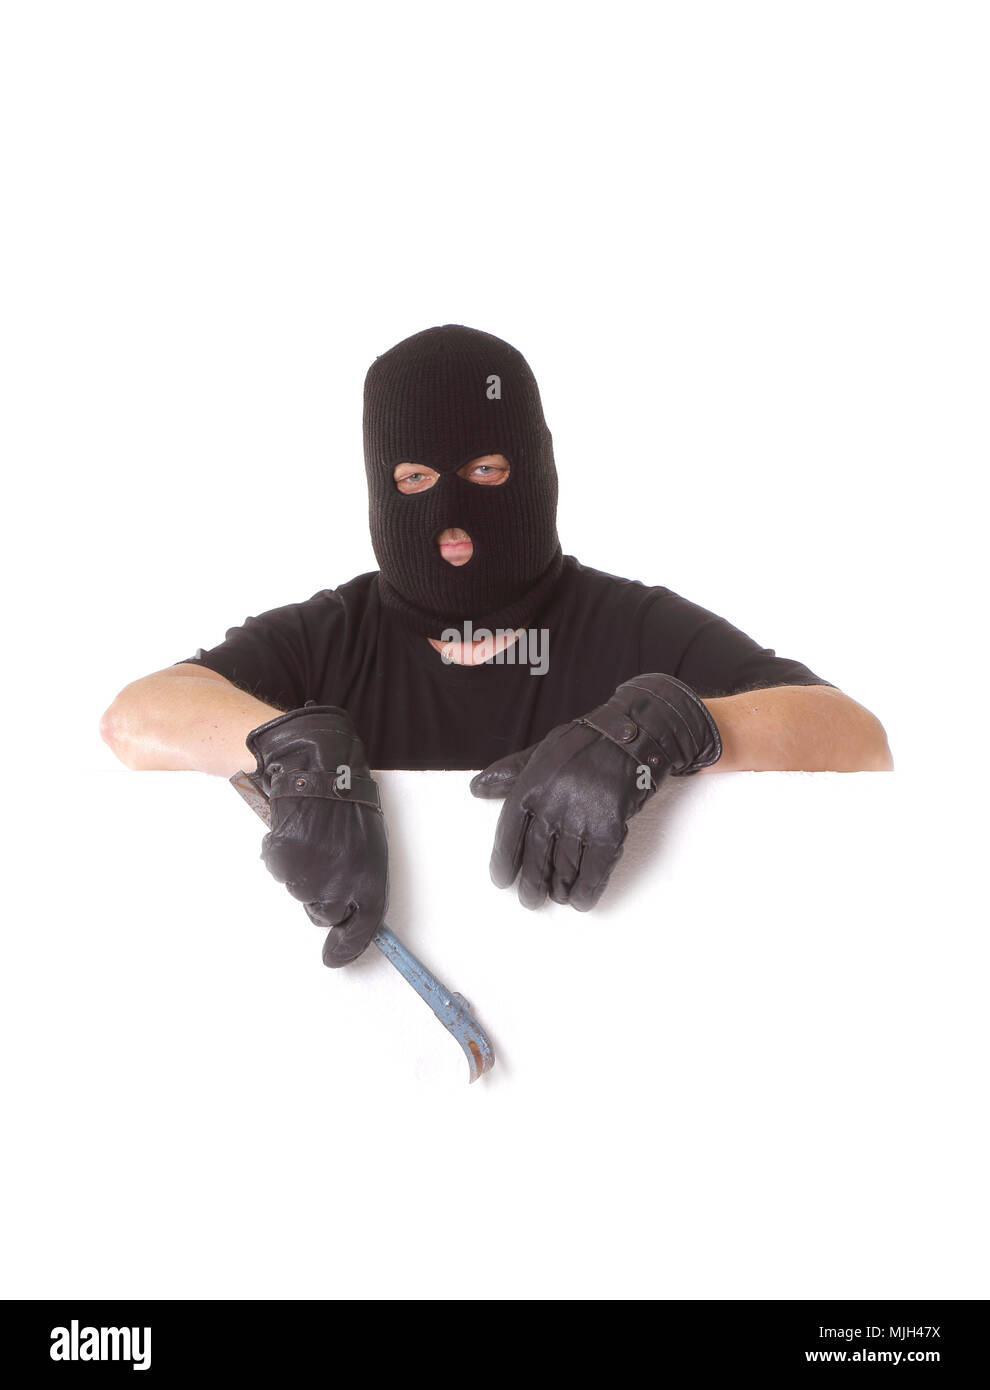 Premium Photo  Surprised man thief dressed in robber mask holding